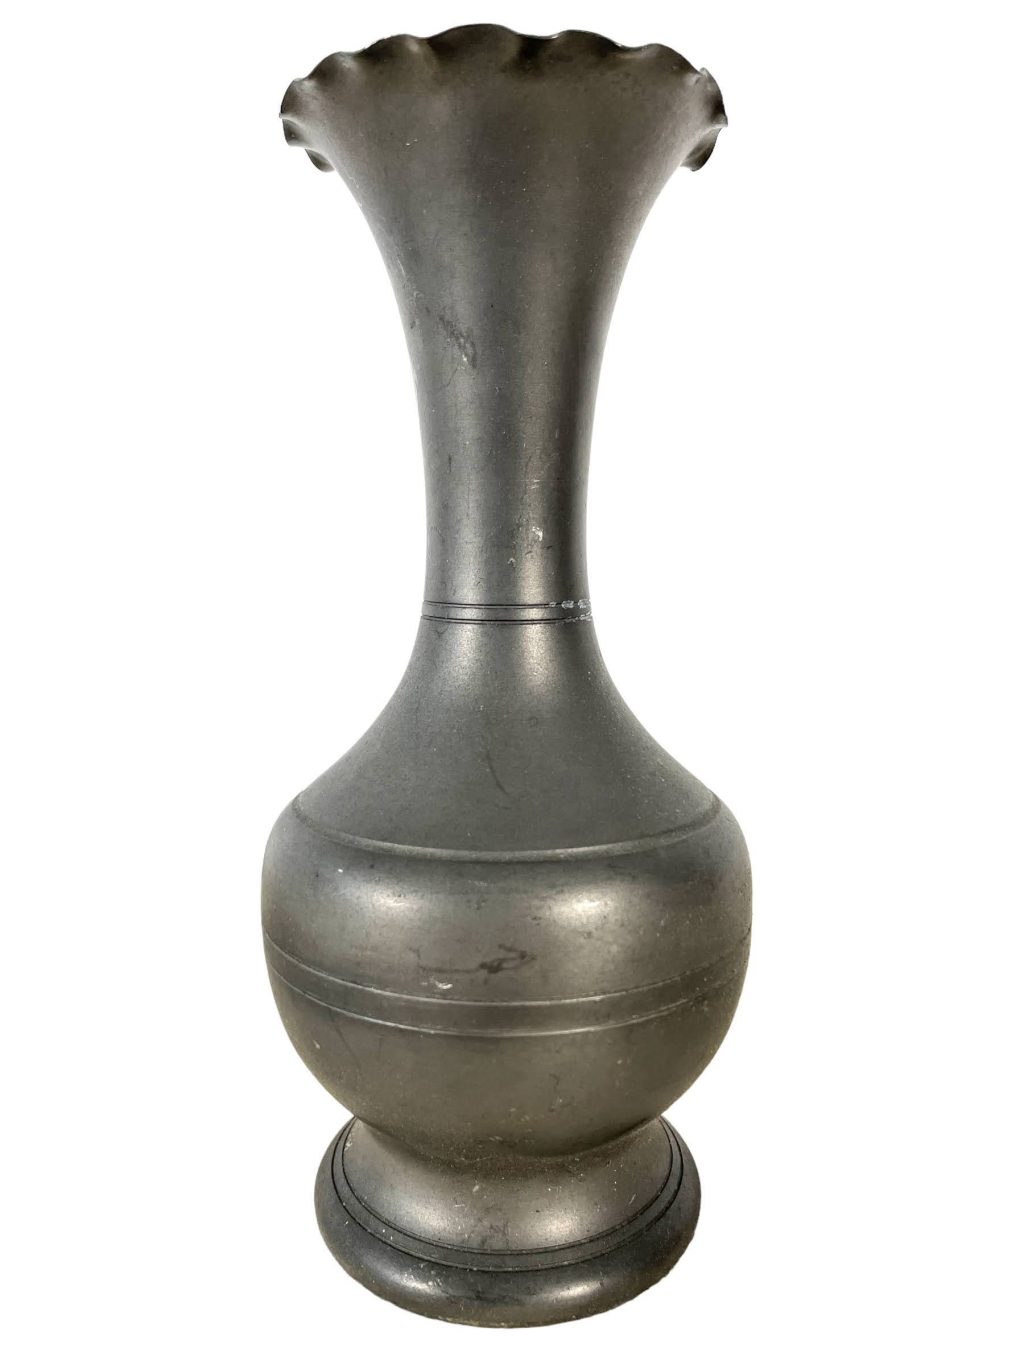 Vintage French Pewter Vase Decorative Ornament circa 1960-70’s